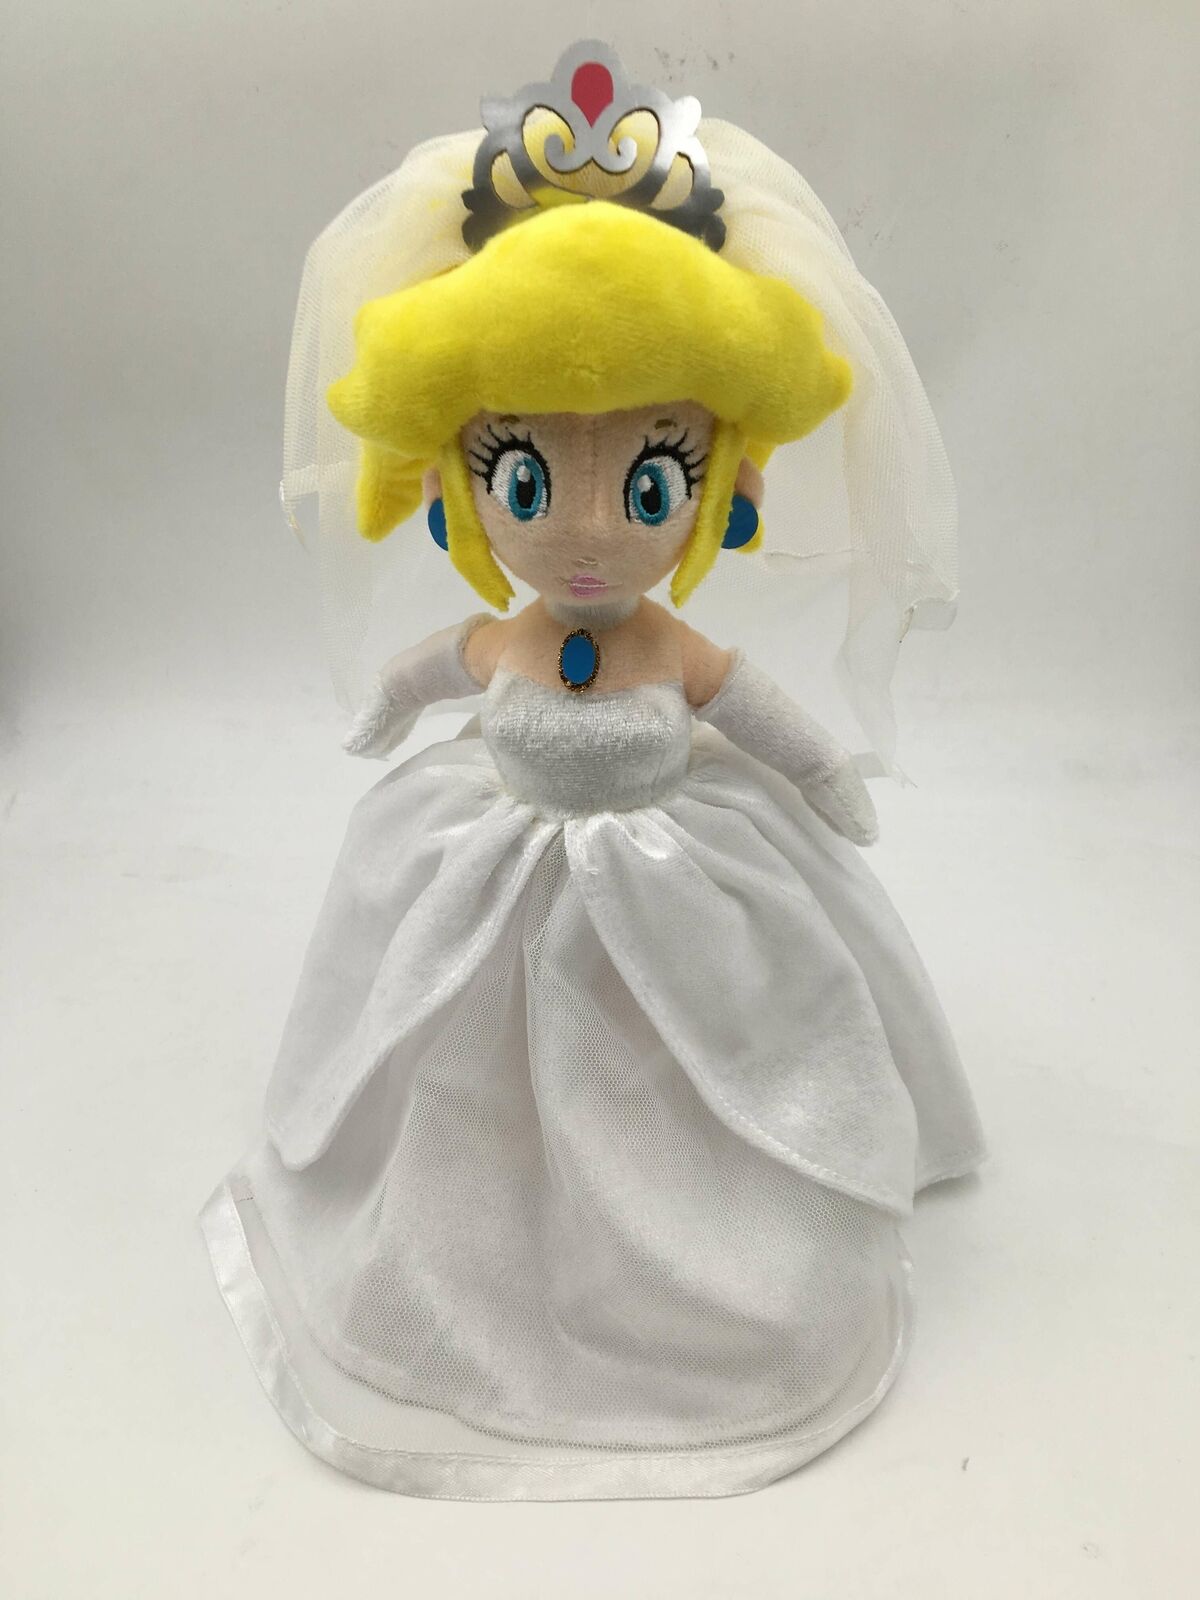 Super Mario Odyssey Princess Peach Wedding Style Plush Doll - 12 In. - Best Gift